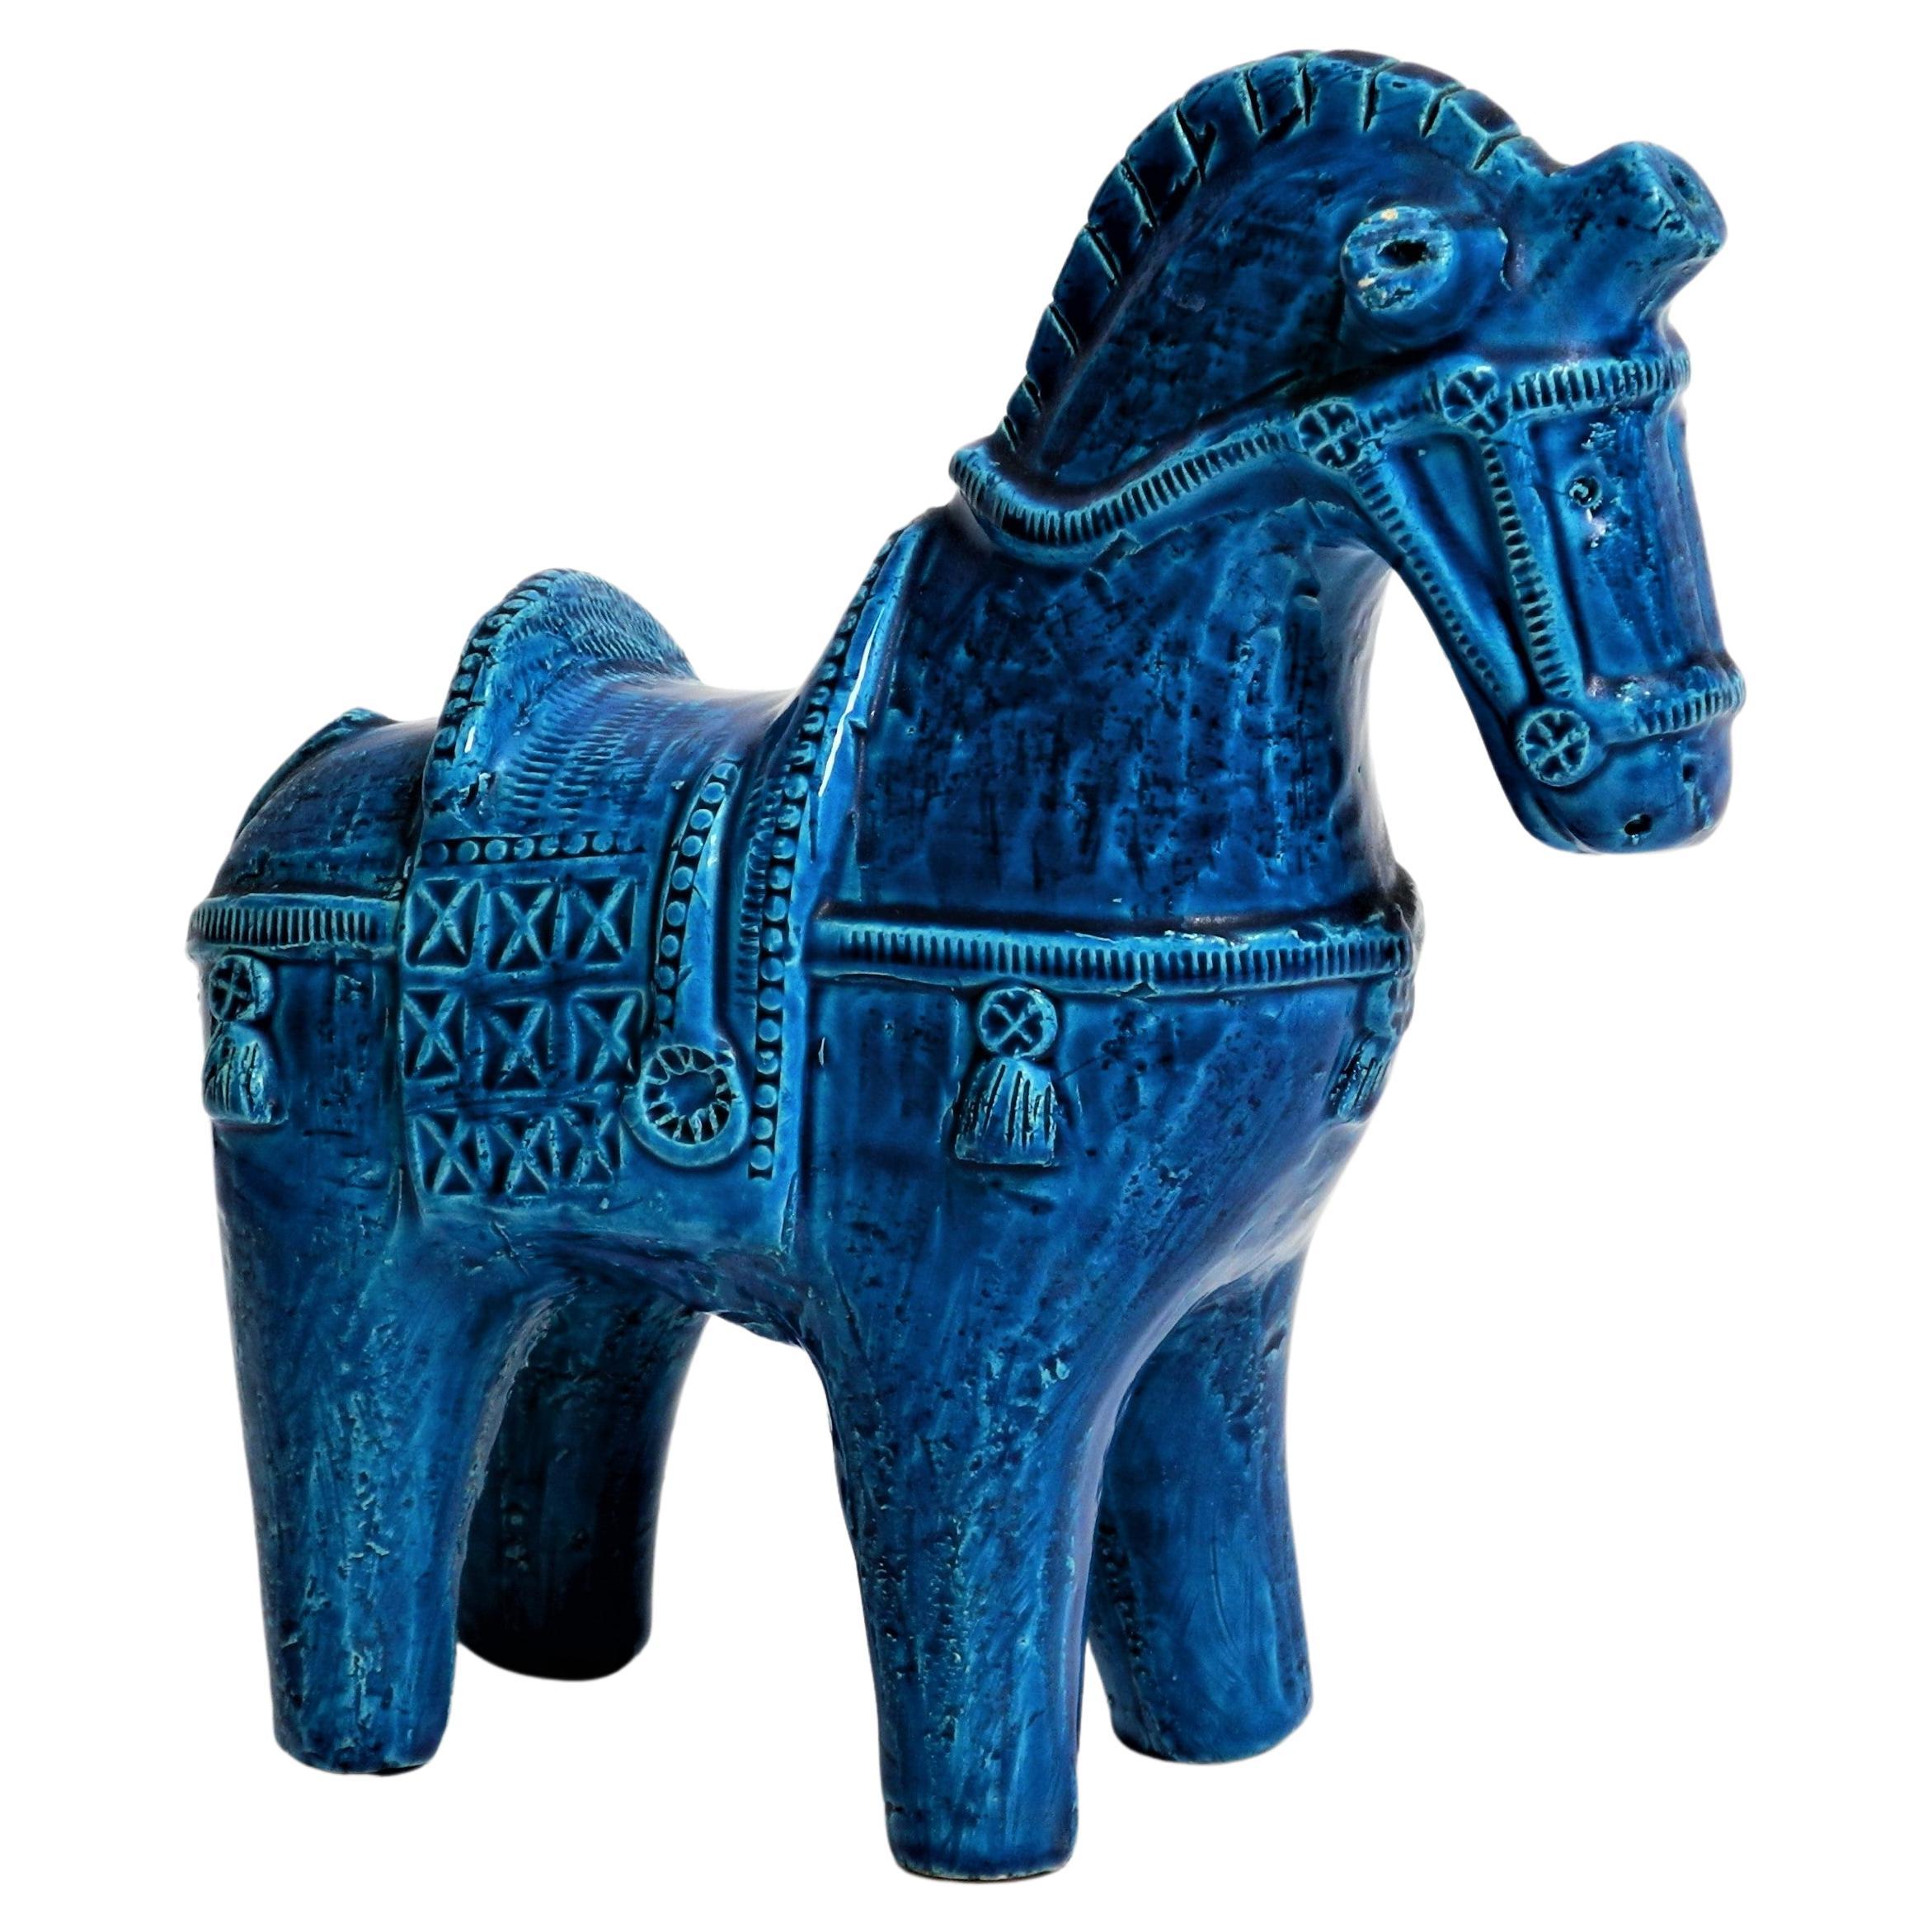 Ceramic "Rimini Blue" Horse by Aldo Londi for Bitossi, Glazed Pottery Sculpture